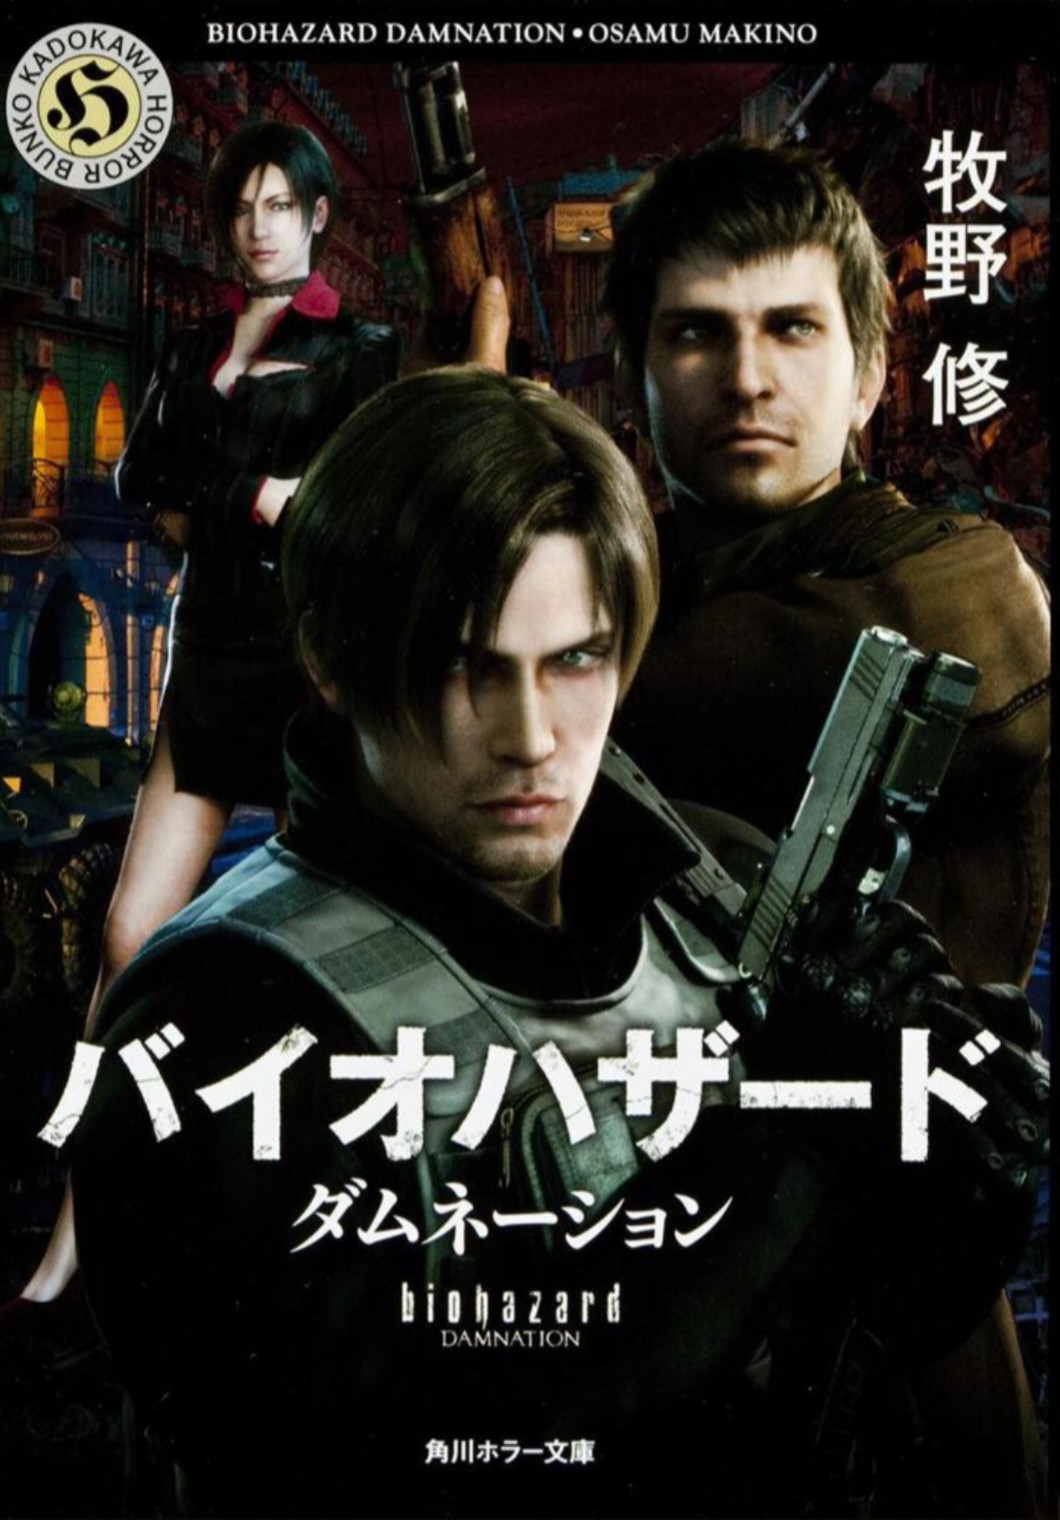 Resident Evil 4 STORY recap! Fandom Wiki Read-through 